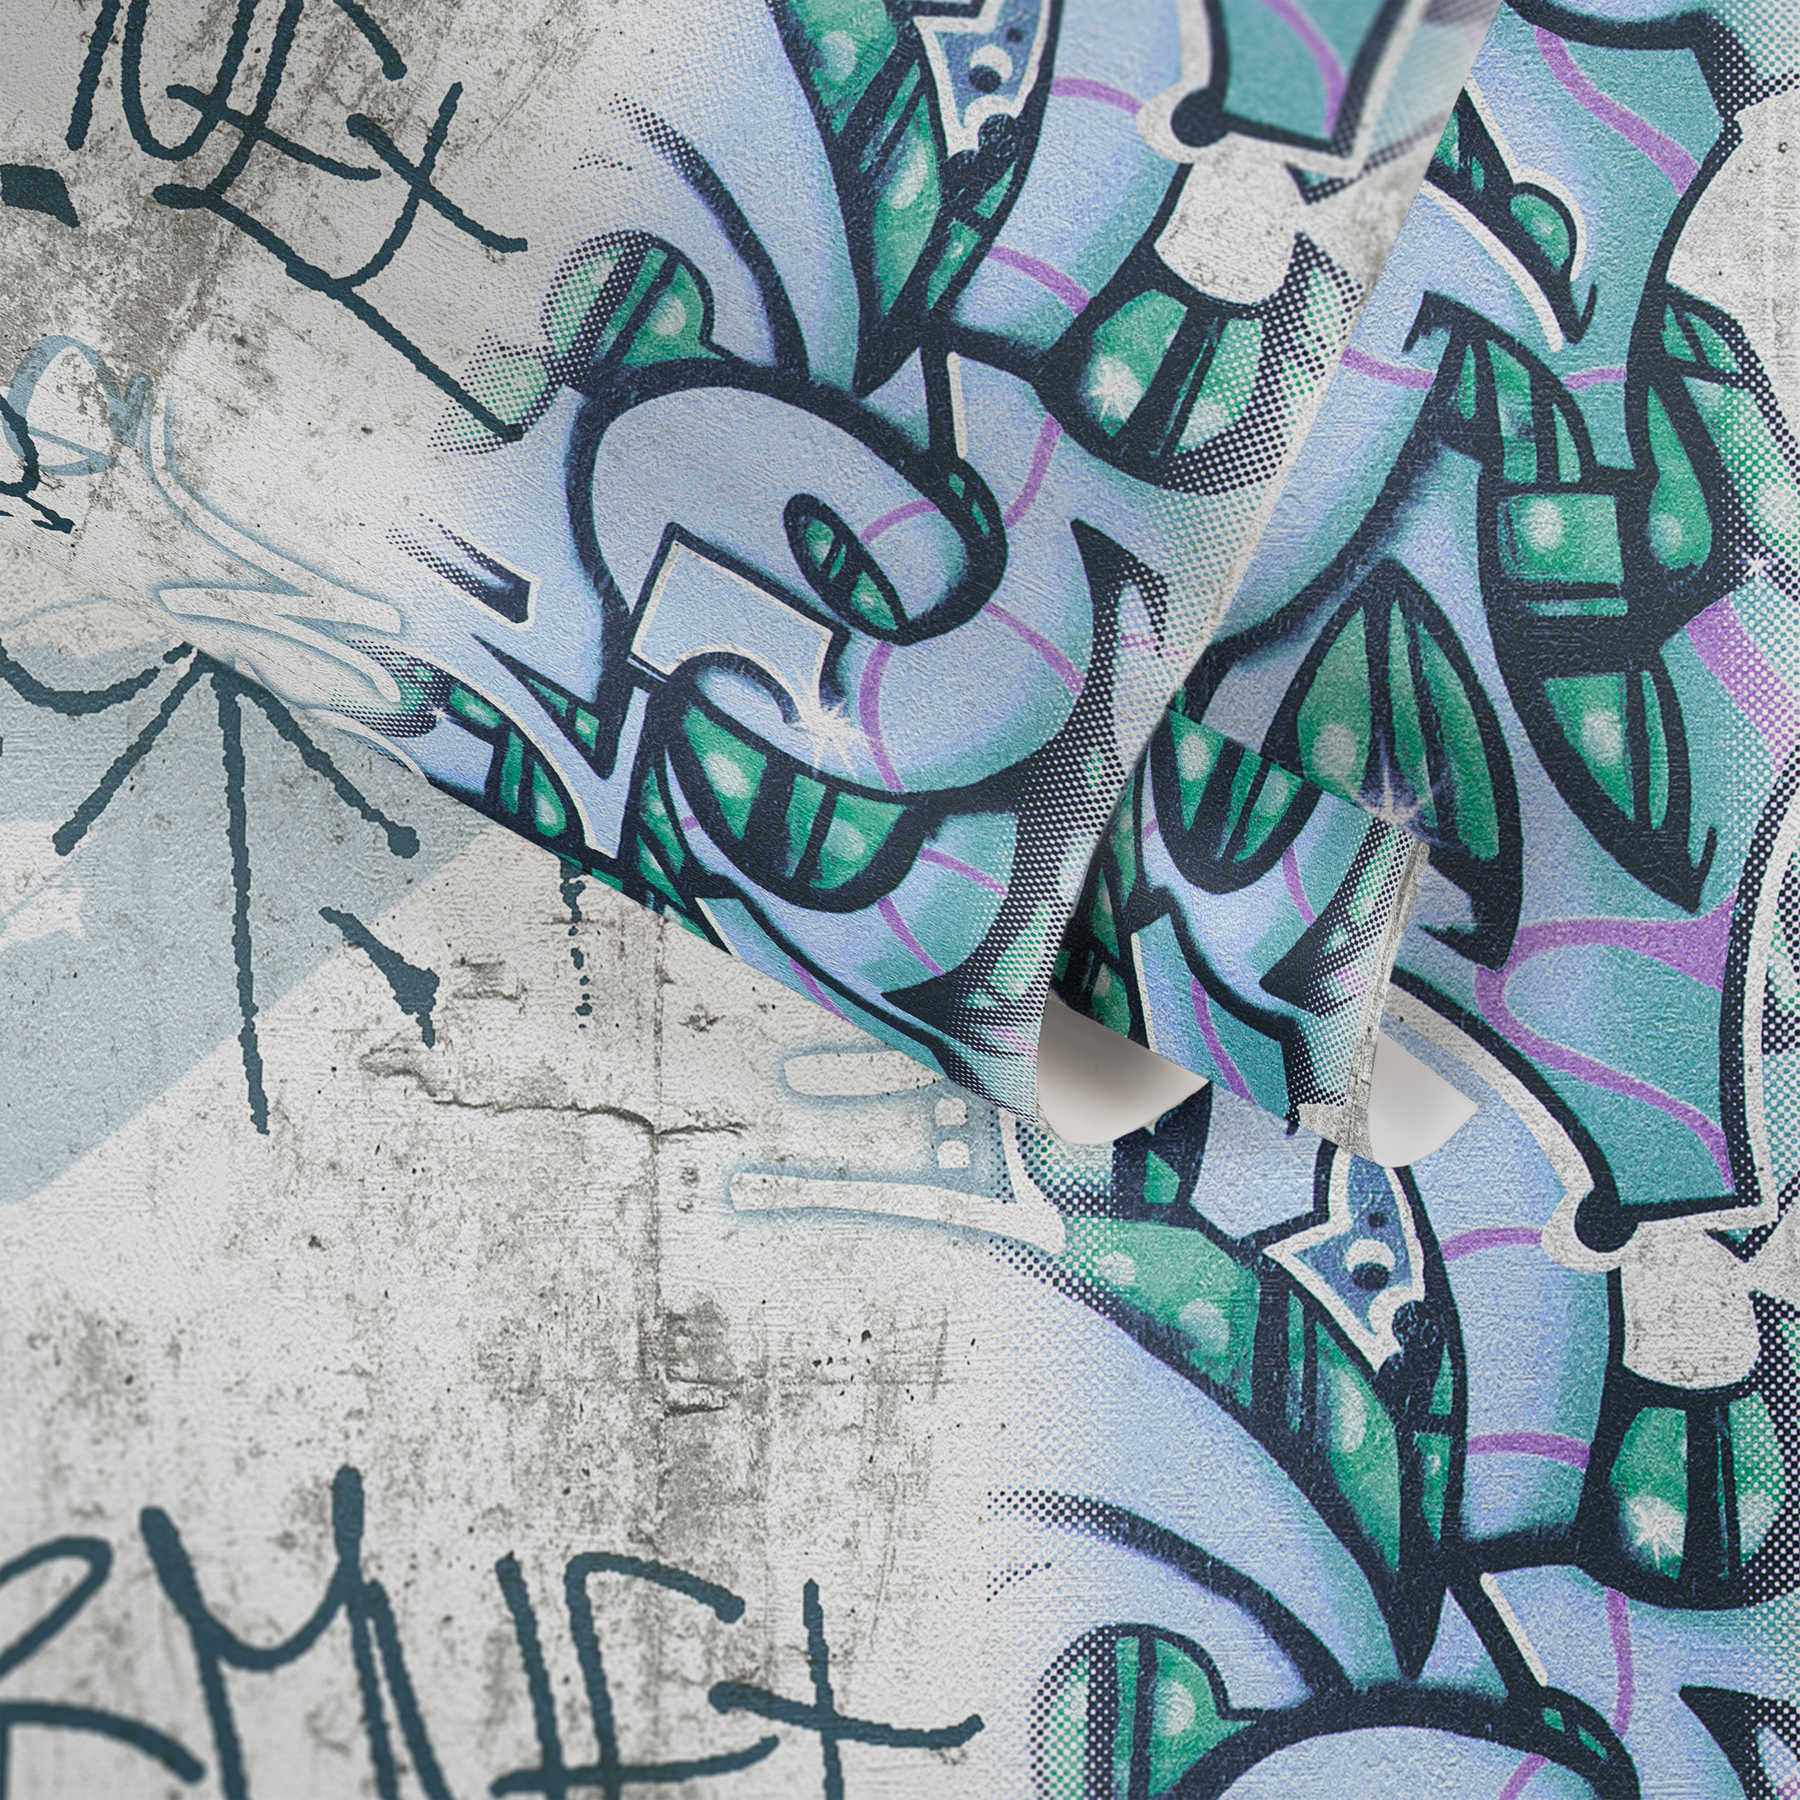             Papier peint jeunesse Graffiti street look - gris, vert
        